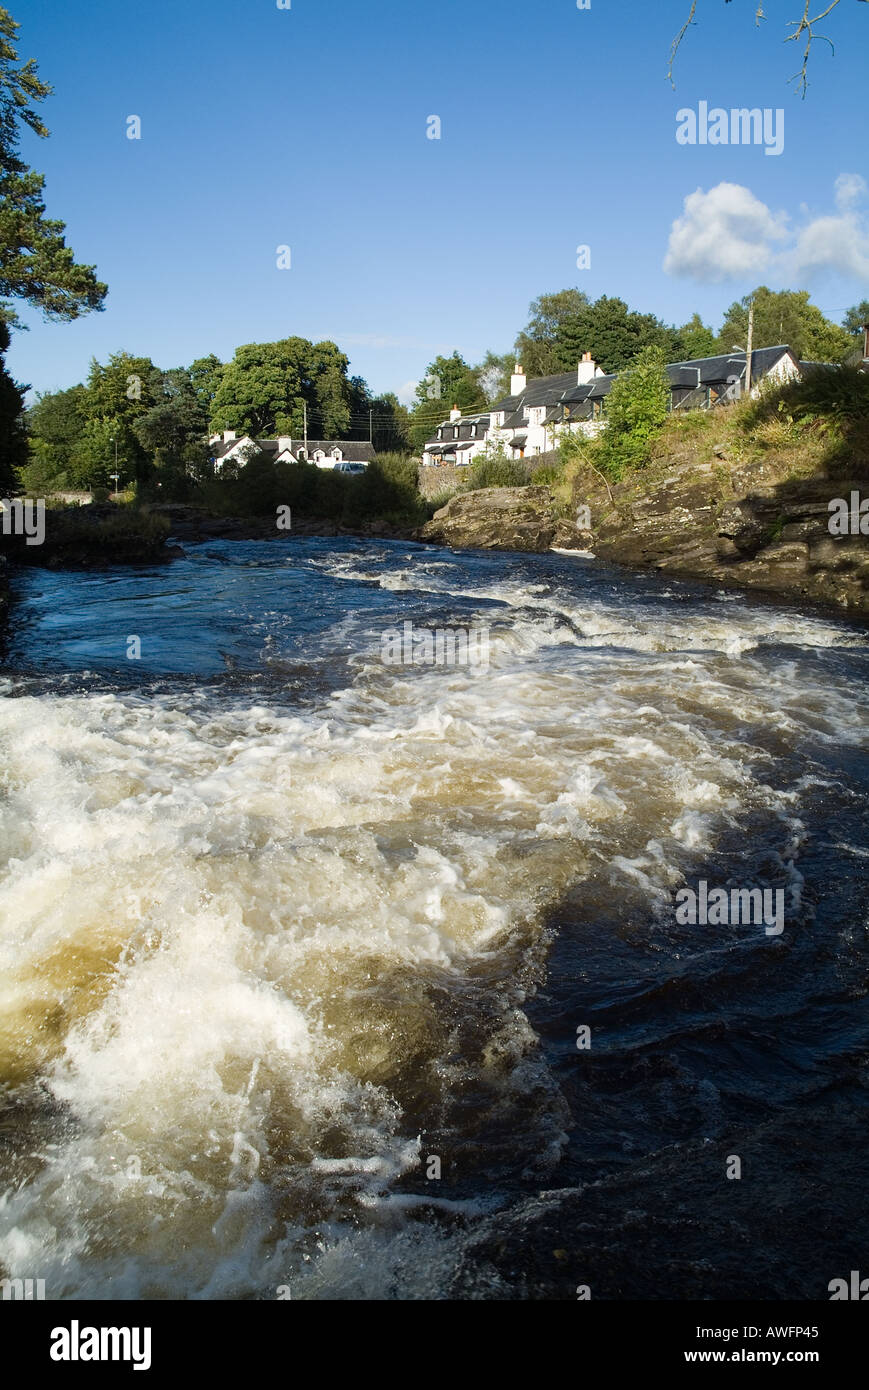 dh Falls of Dochart KILLIN STIRLINGSHIRE River Dochart rapids and village Stock Photo